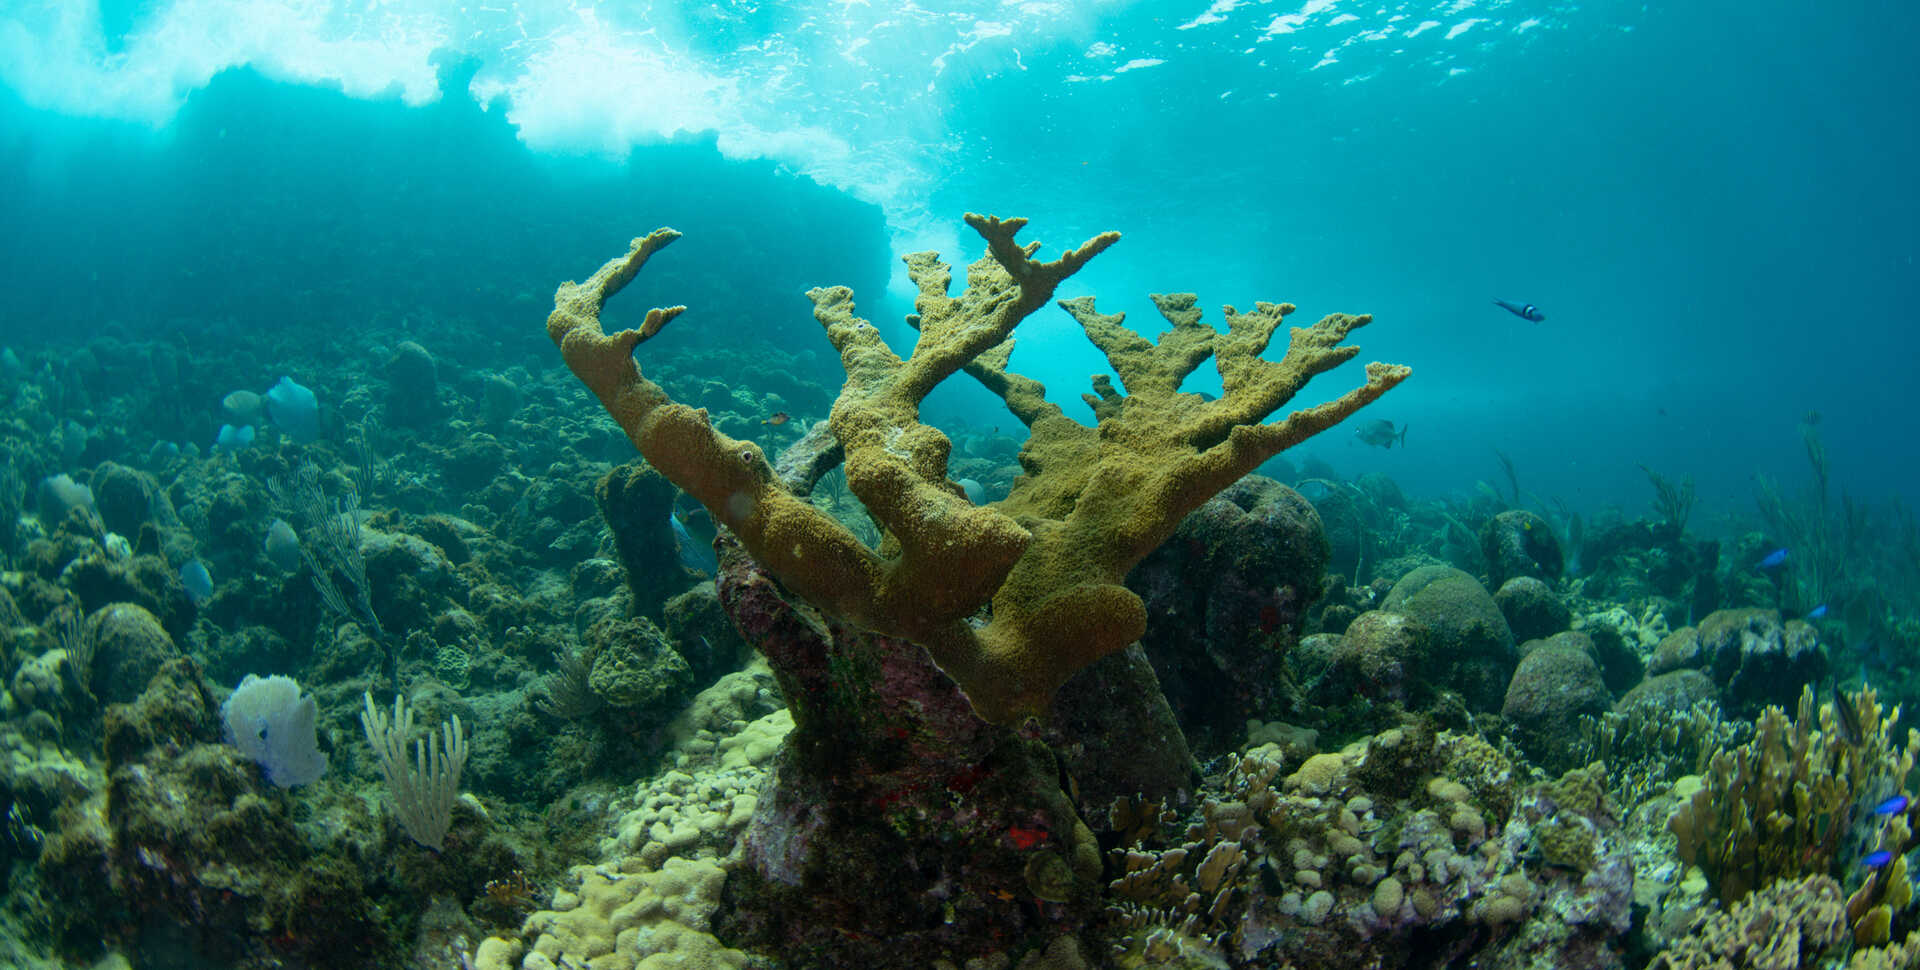 Underwater photo of healthy elkhorn coral on a reef in Roatan. Photo by Luiz Rocha